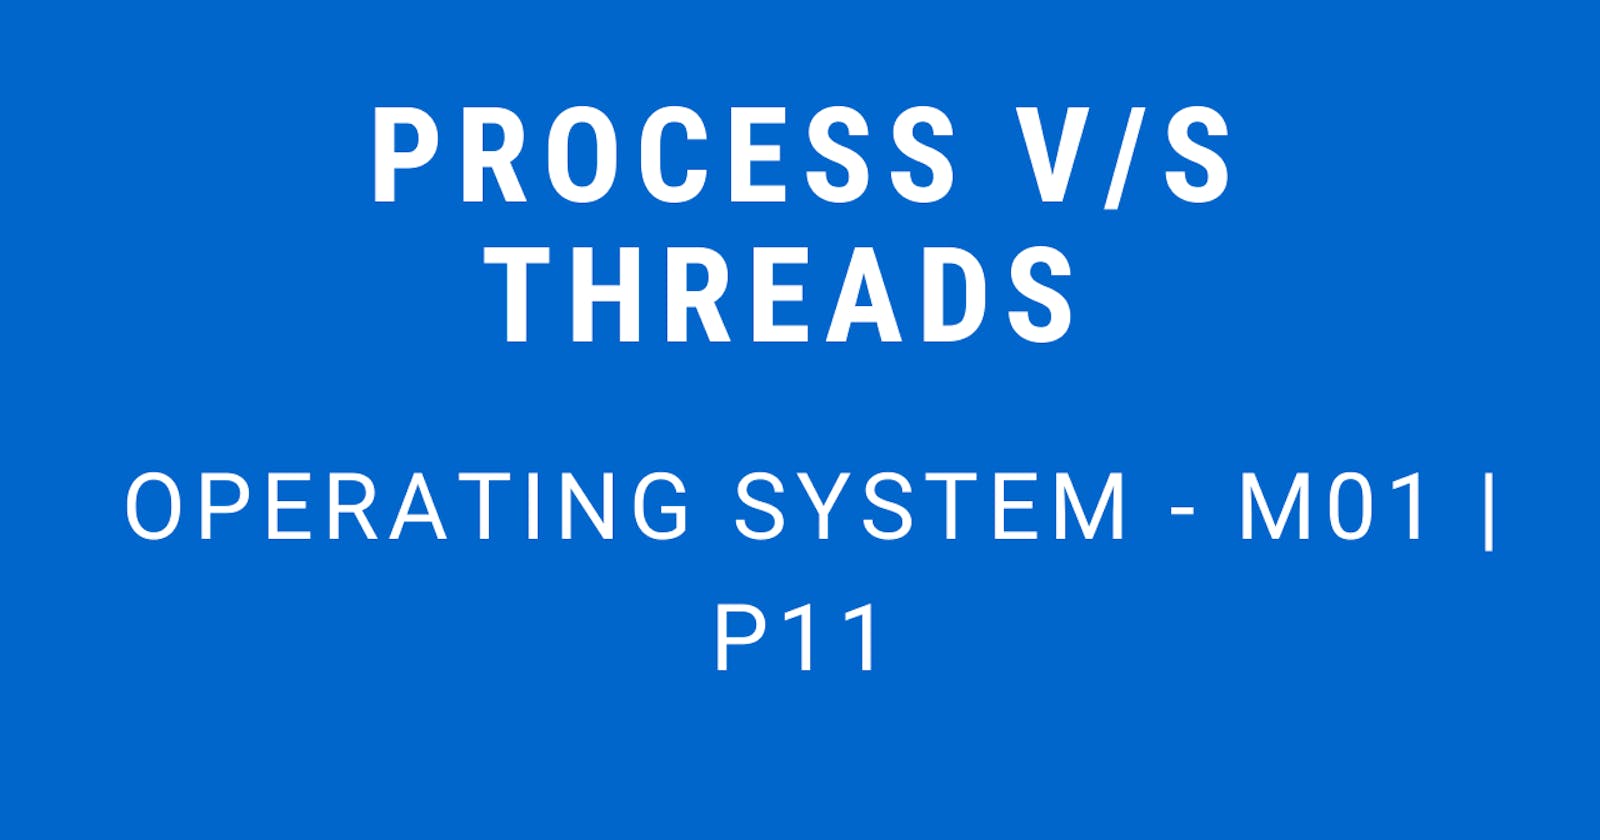 Process v/s Thread | Operating System - M01 P11